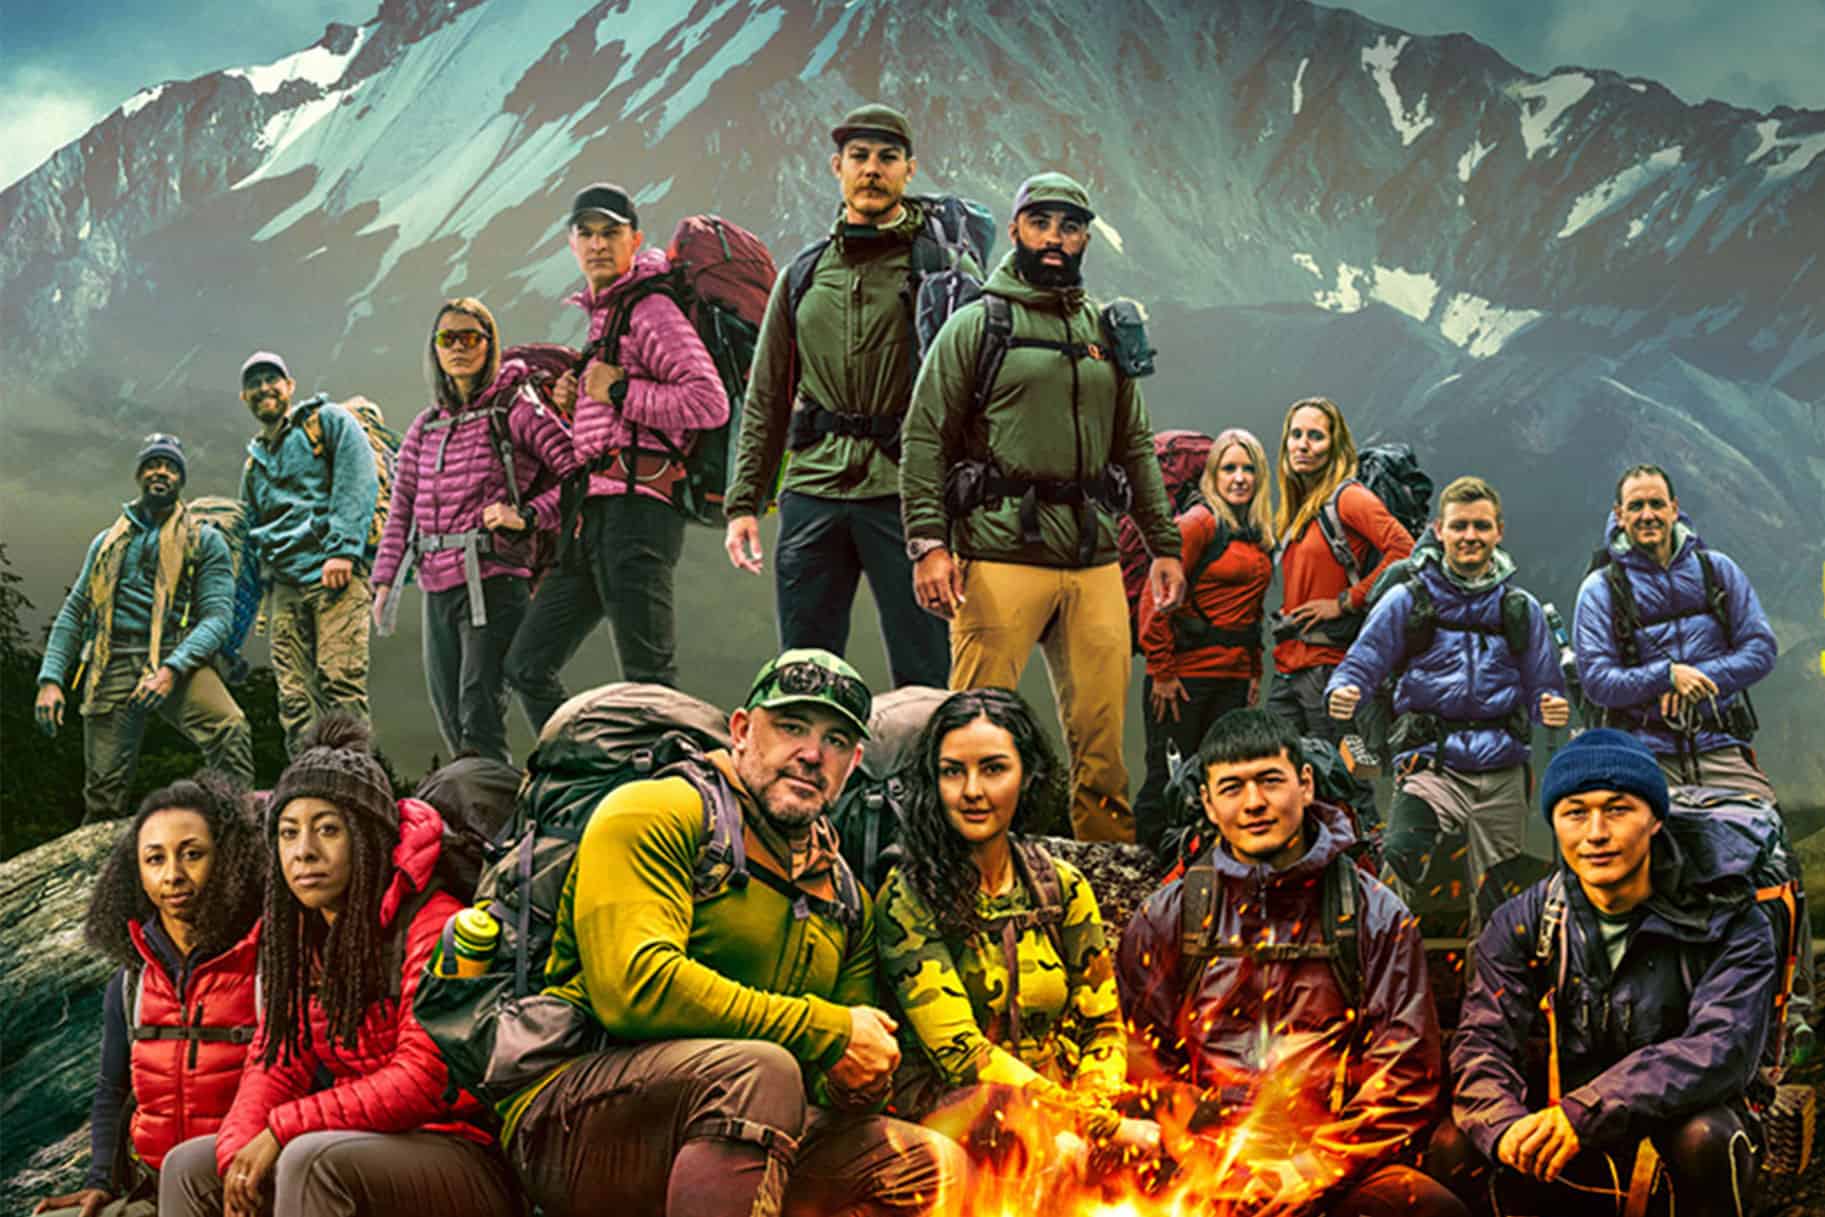 Race to Survival: Alaska